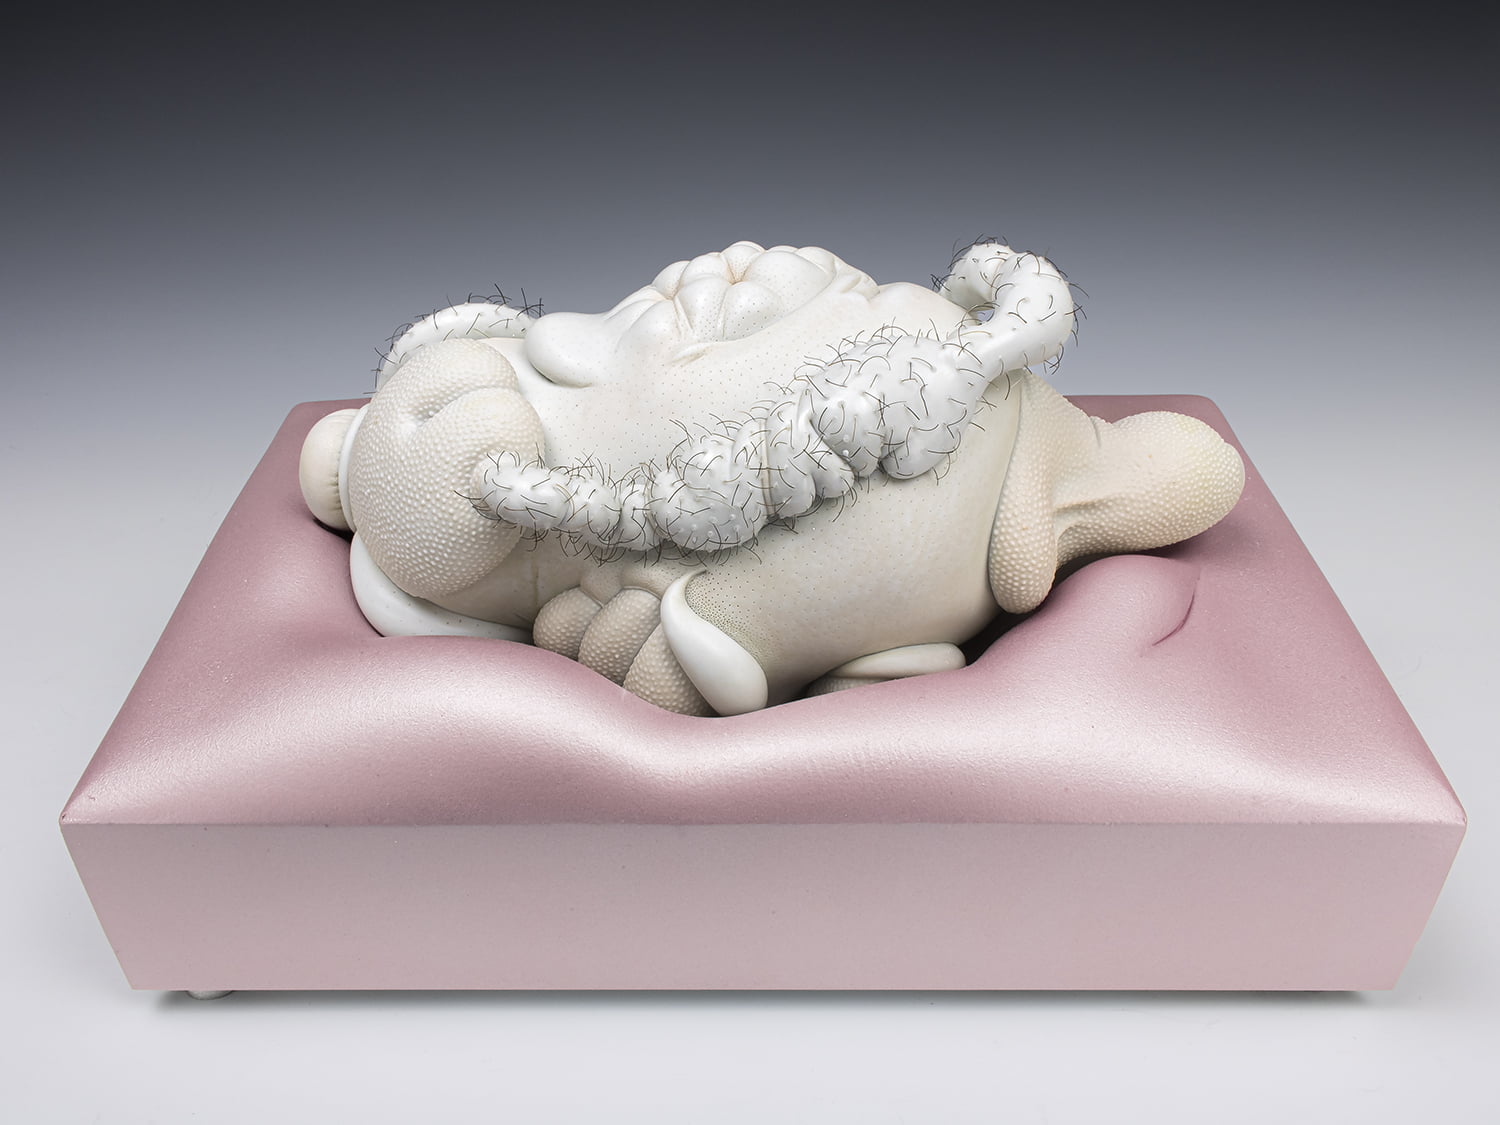 Jason Briggs "Ventura" (full view). porcelain and mixed media sculpture ceramics.